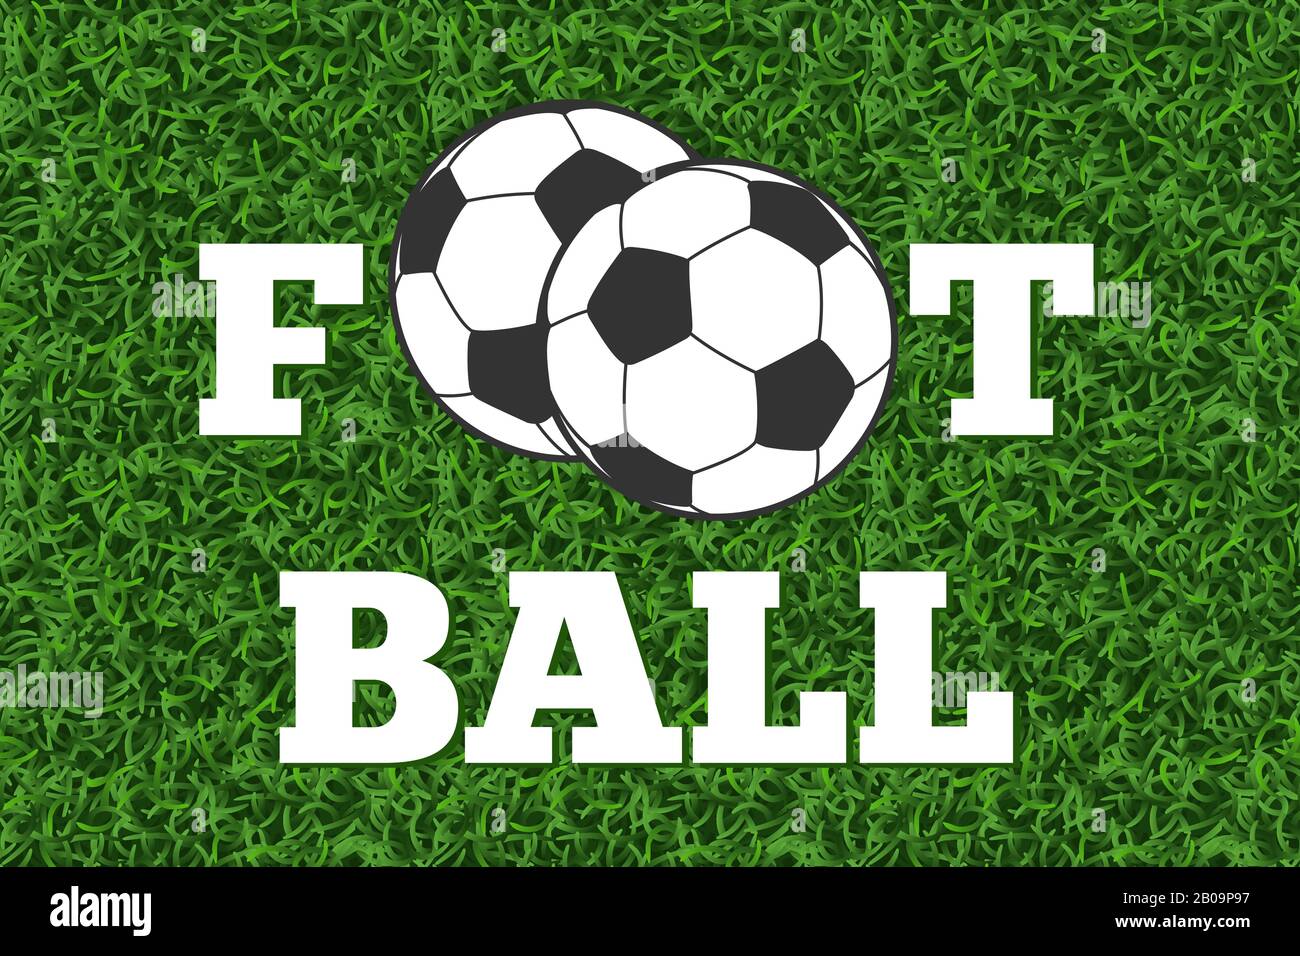 Football letters and ball green grass field vector illustration. Sport soccer banner Stock Vector